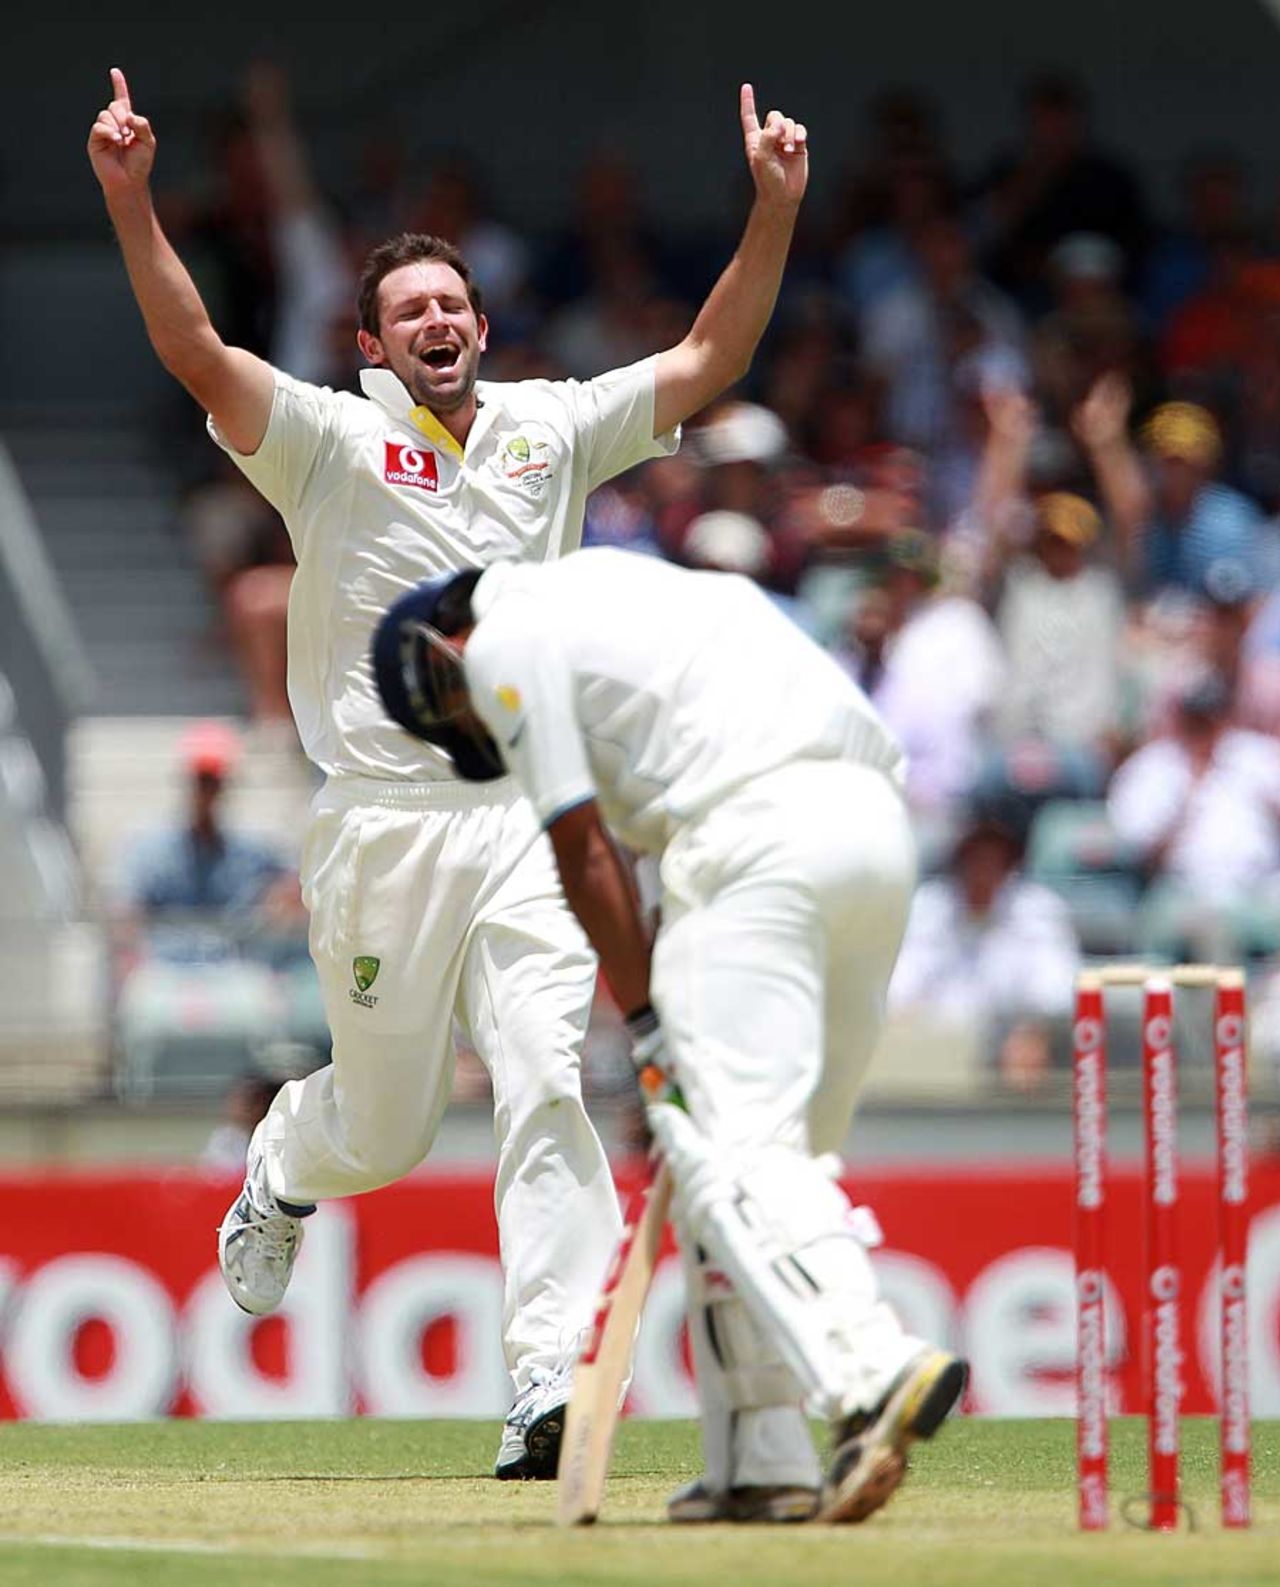 Ben Hilfenhaus saw off Gautam Gambhir, Australia v India, 3rd Test, Perth, 1st day, January 13, 2012